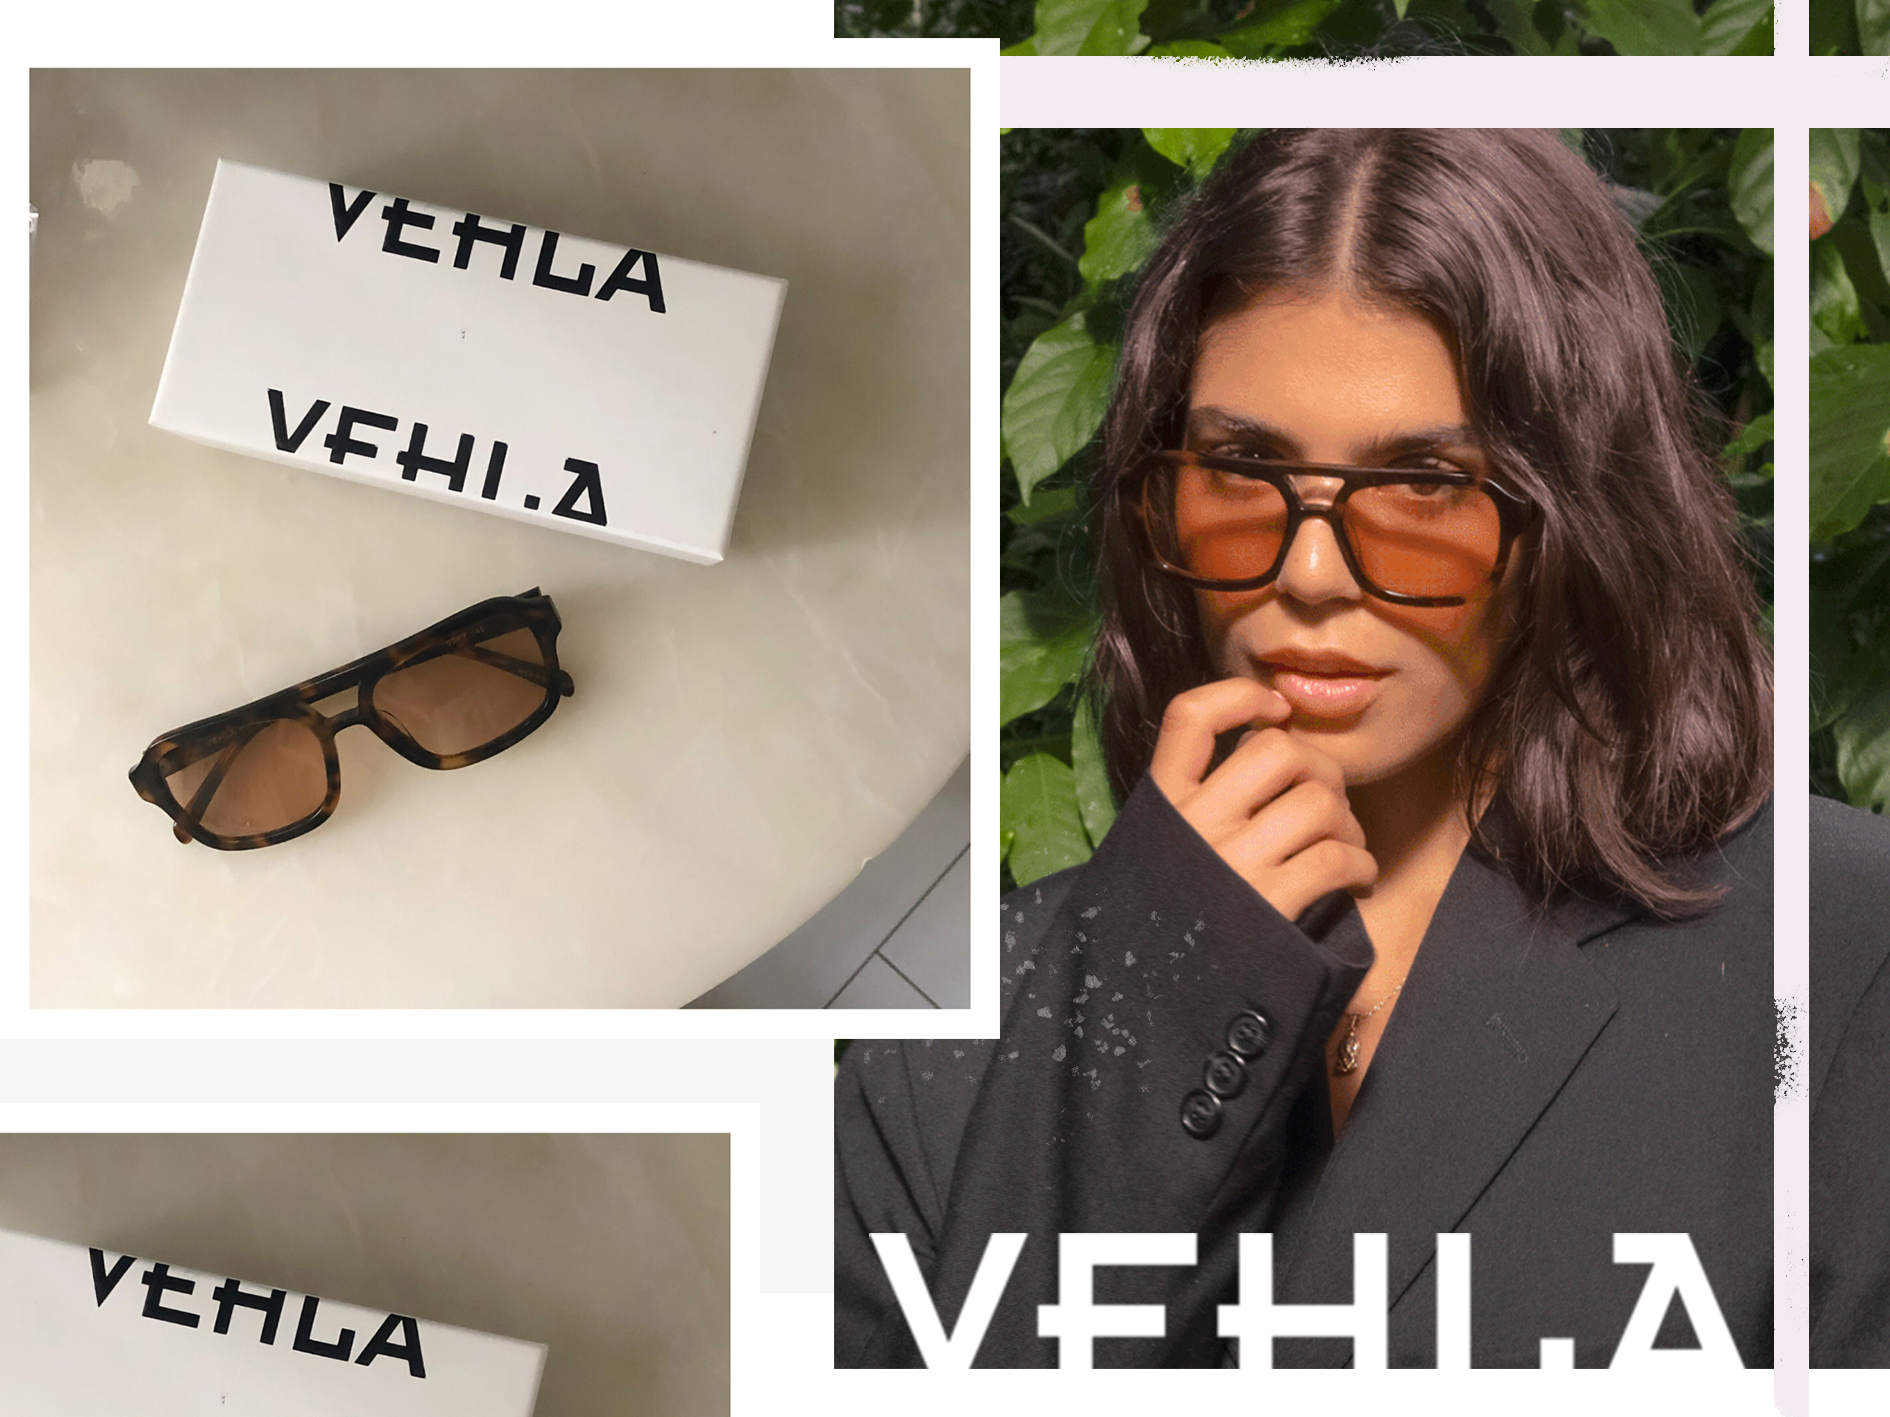 Vehla очки купить. Vehla очки. Vehla Kaia очки. Очки Vehla Eyewear купить в Москве. Очки Vehla цена.